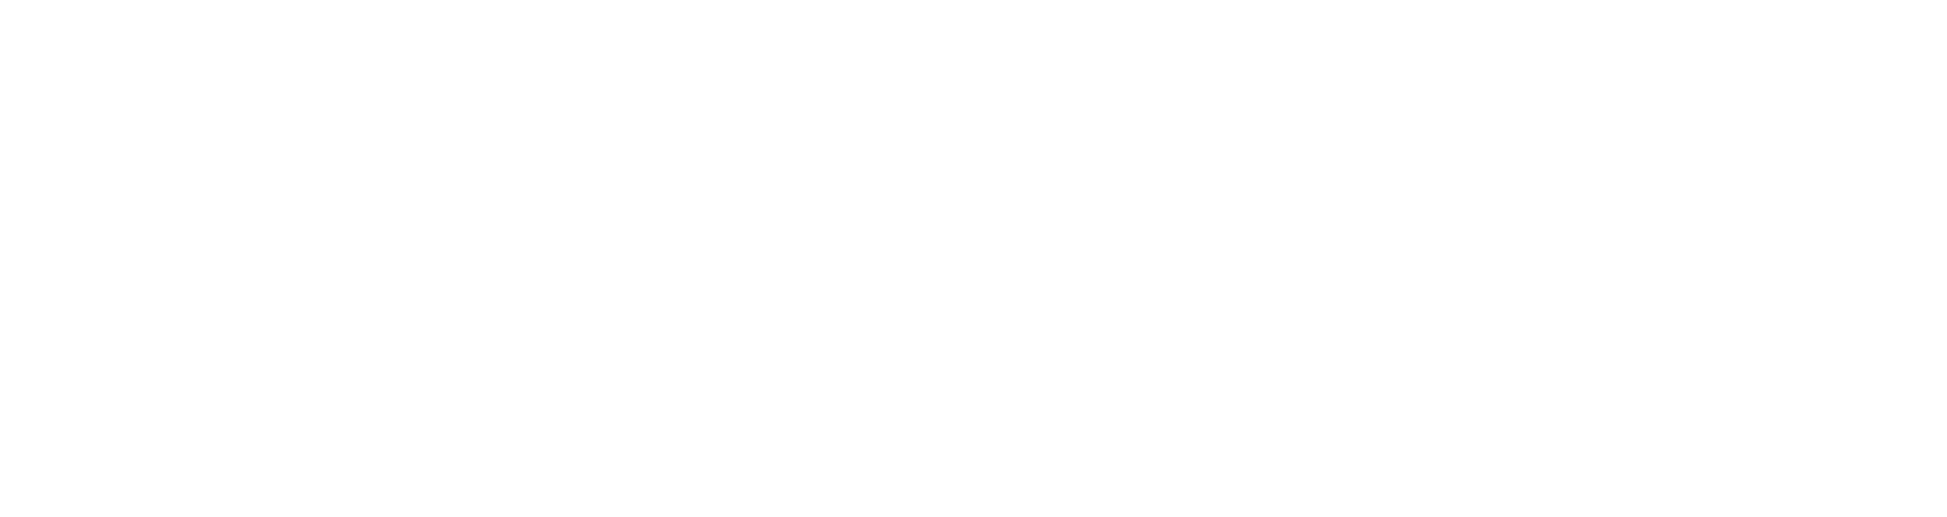 brightedge datamind sears logo